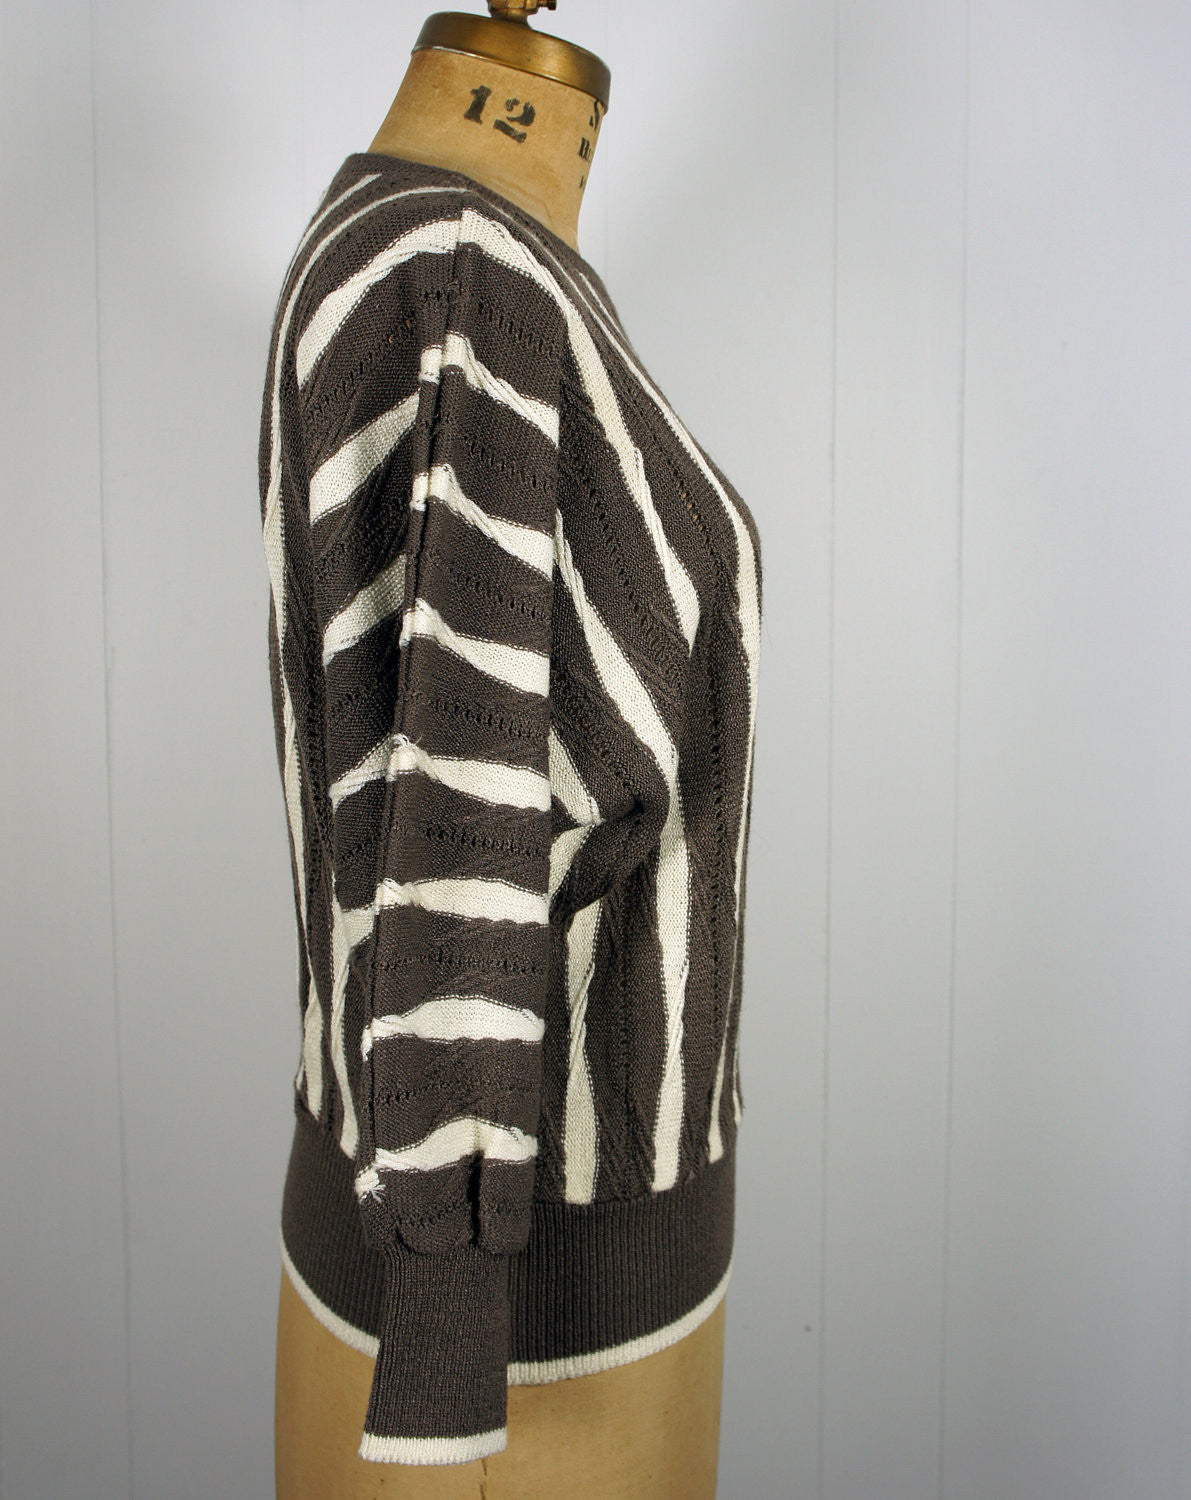 1980's Brown & White Striped Eyelet Knit Sweater, Size M / L